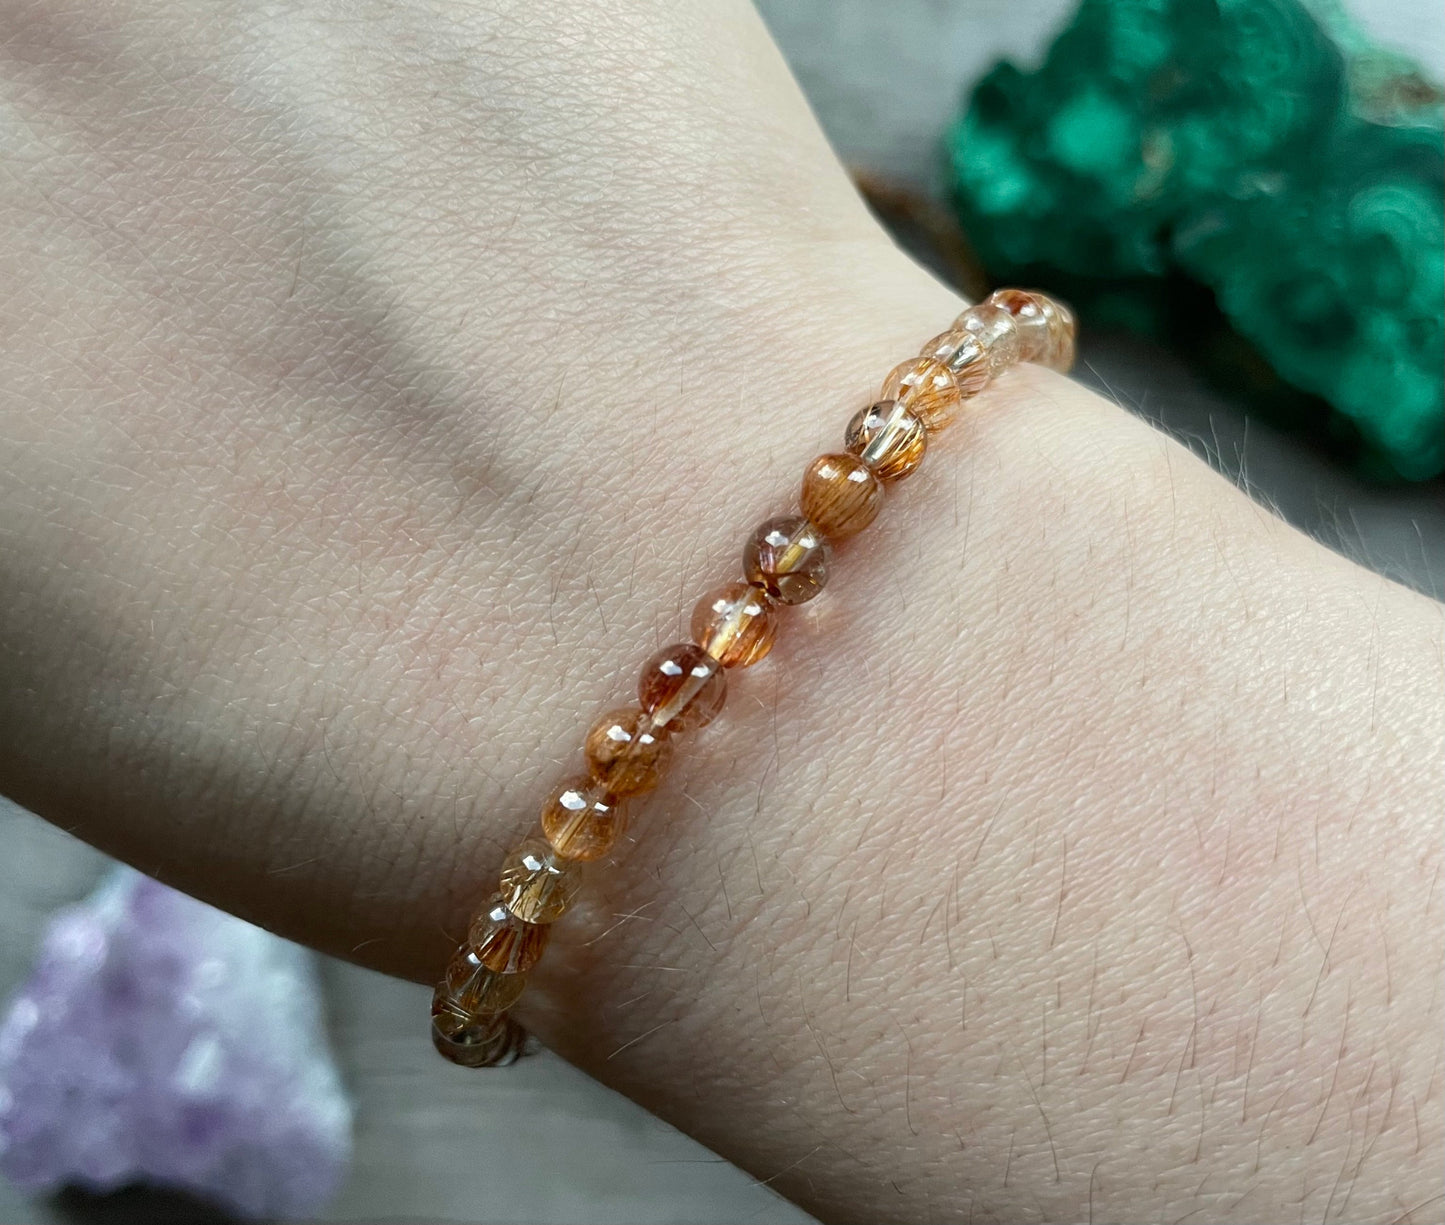 Pictured is a rutilated quartz bead bracelet.